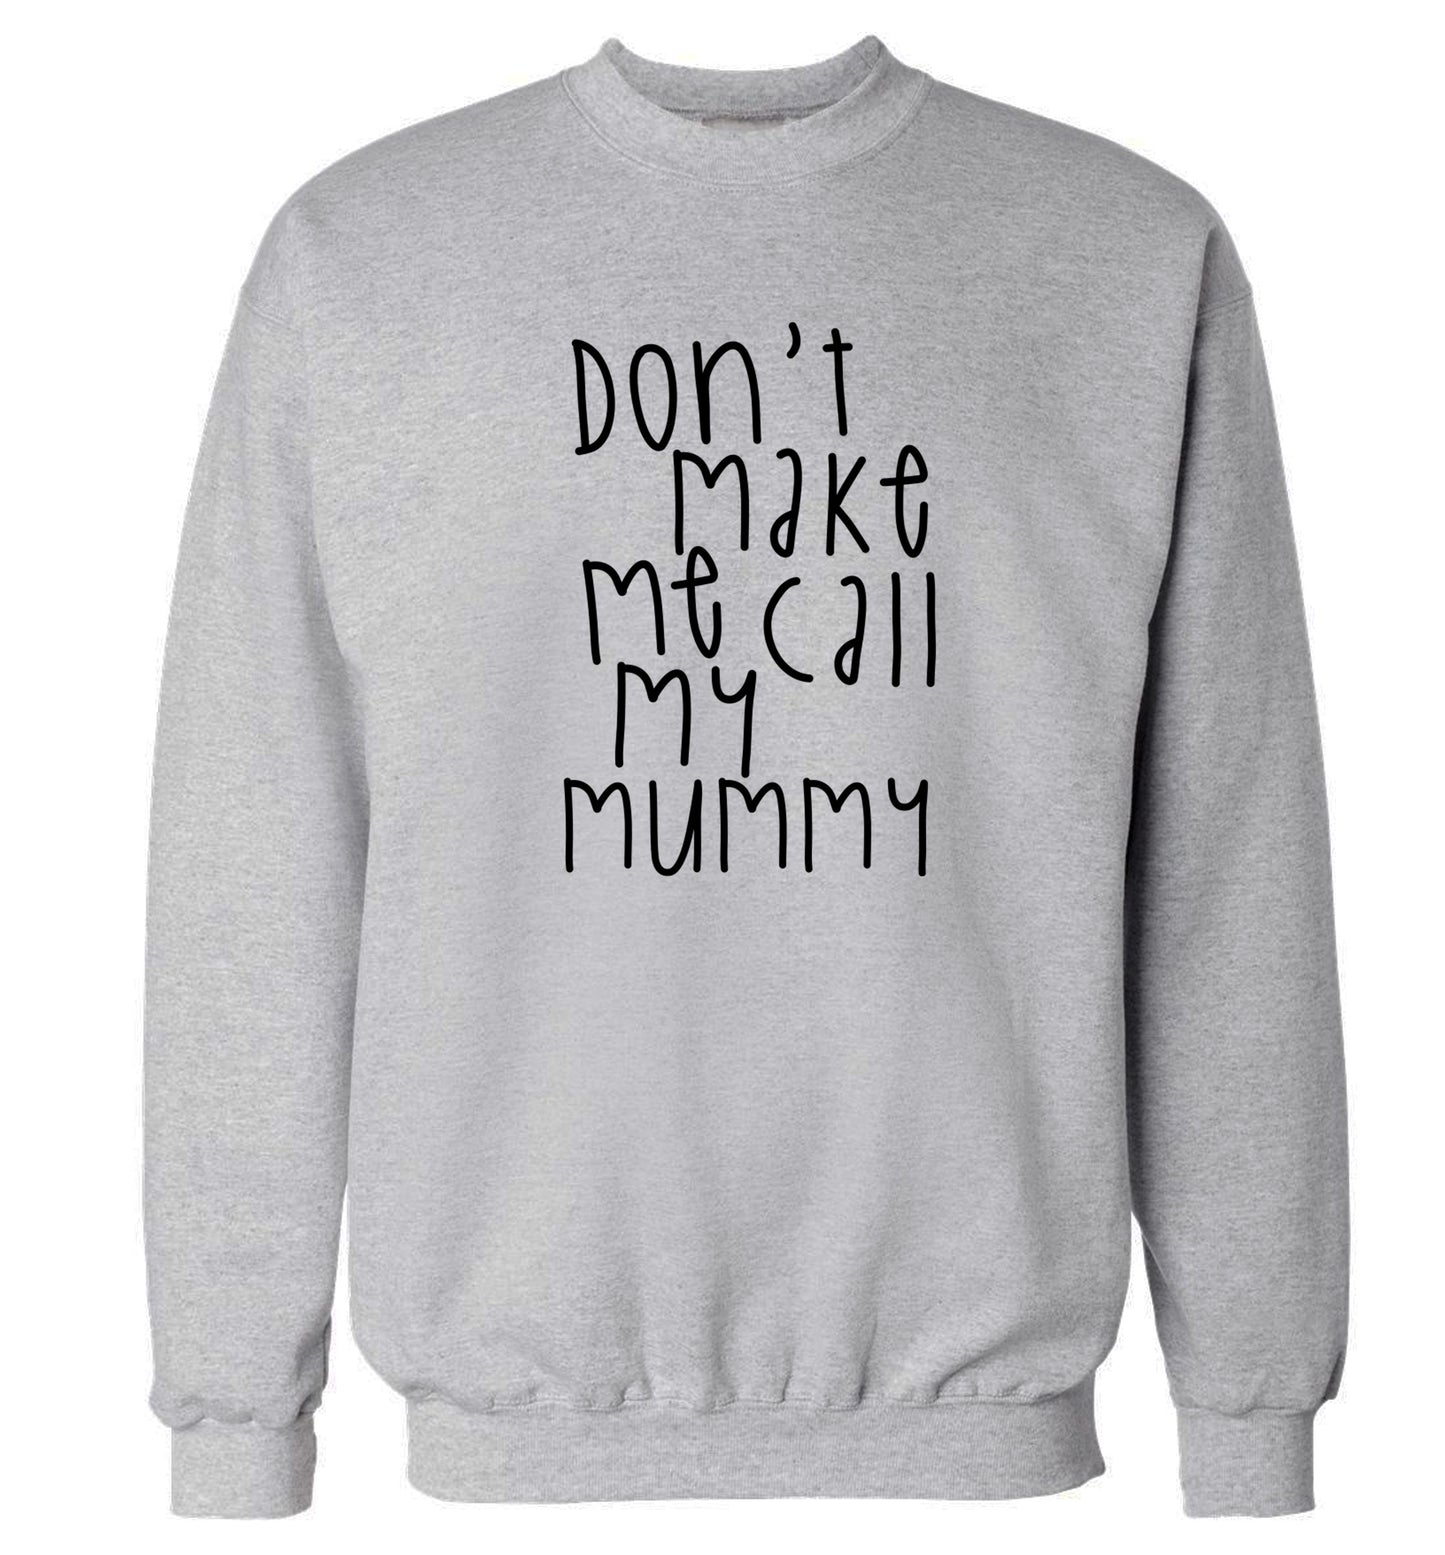 Don't make me call my mummy Adult's unisex grey Sweater 2XL